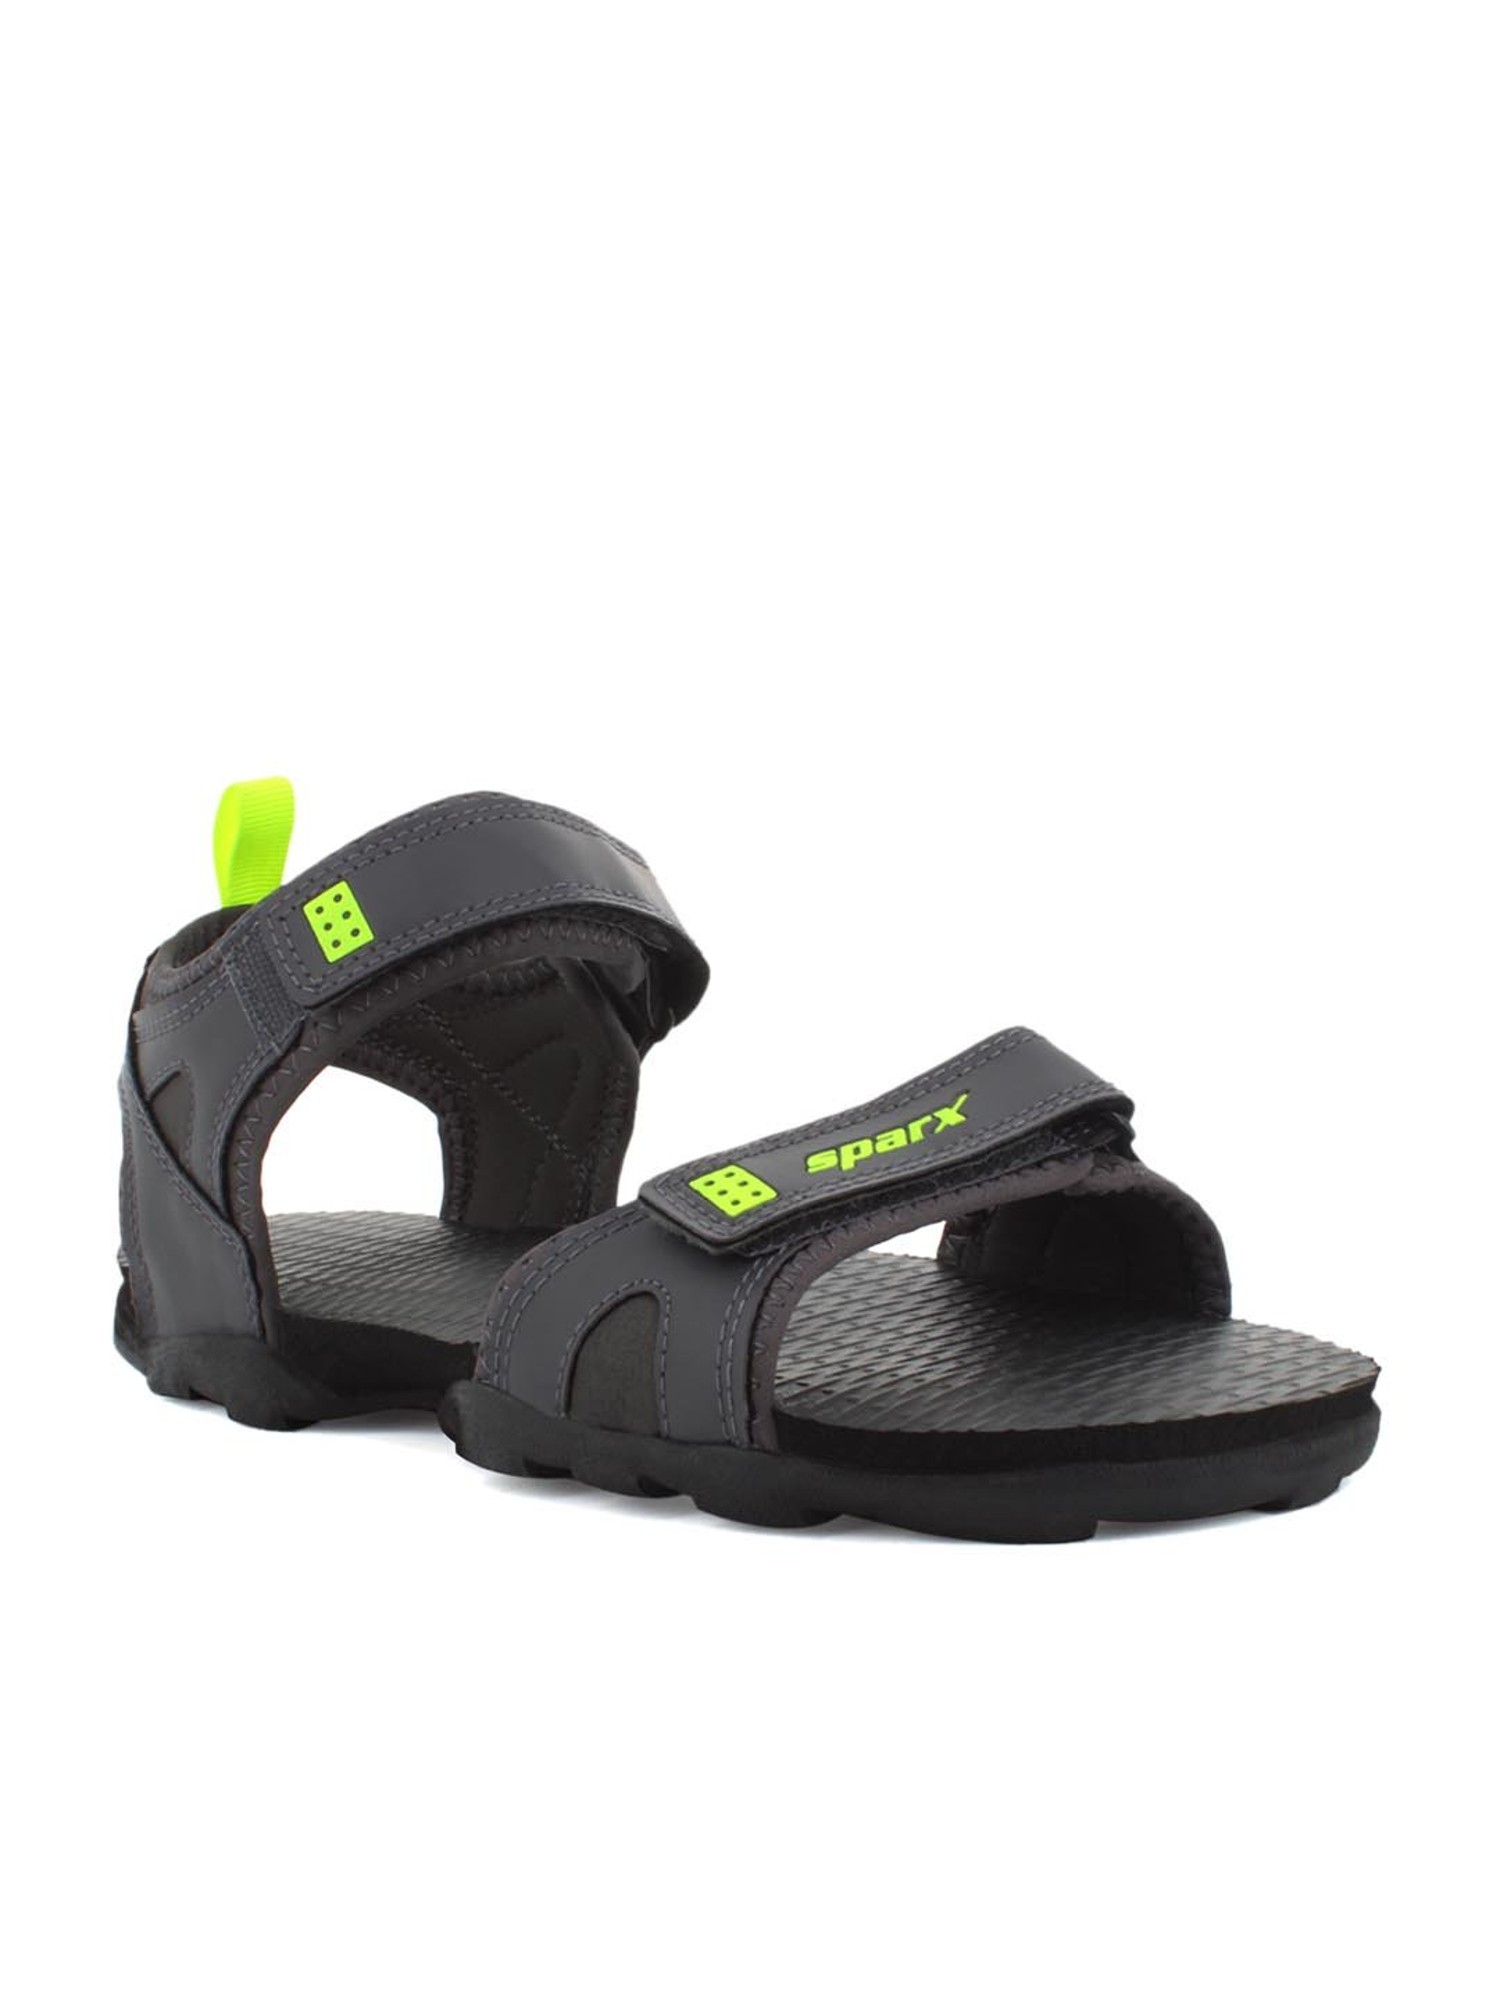 Sparx Mens Fashionable  Trending sandals SS103G Black Grey UK7   Amazonin Fashion